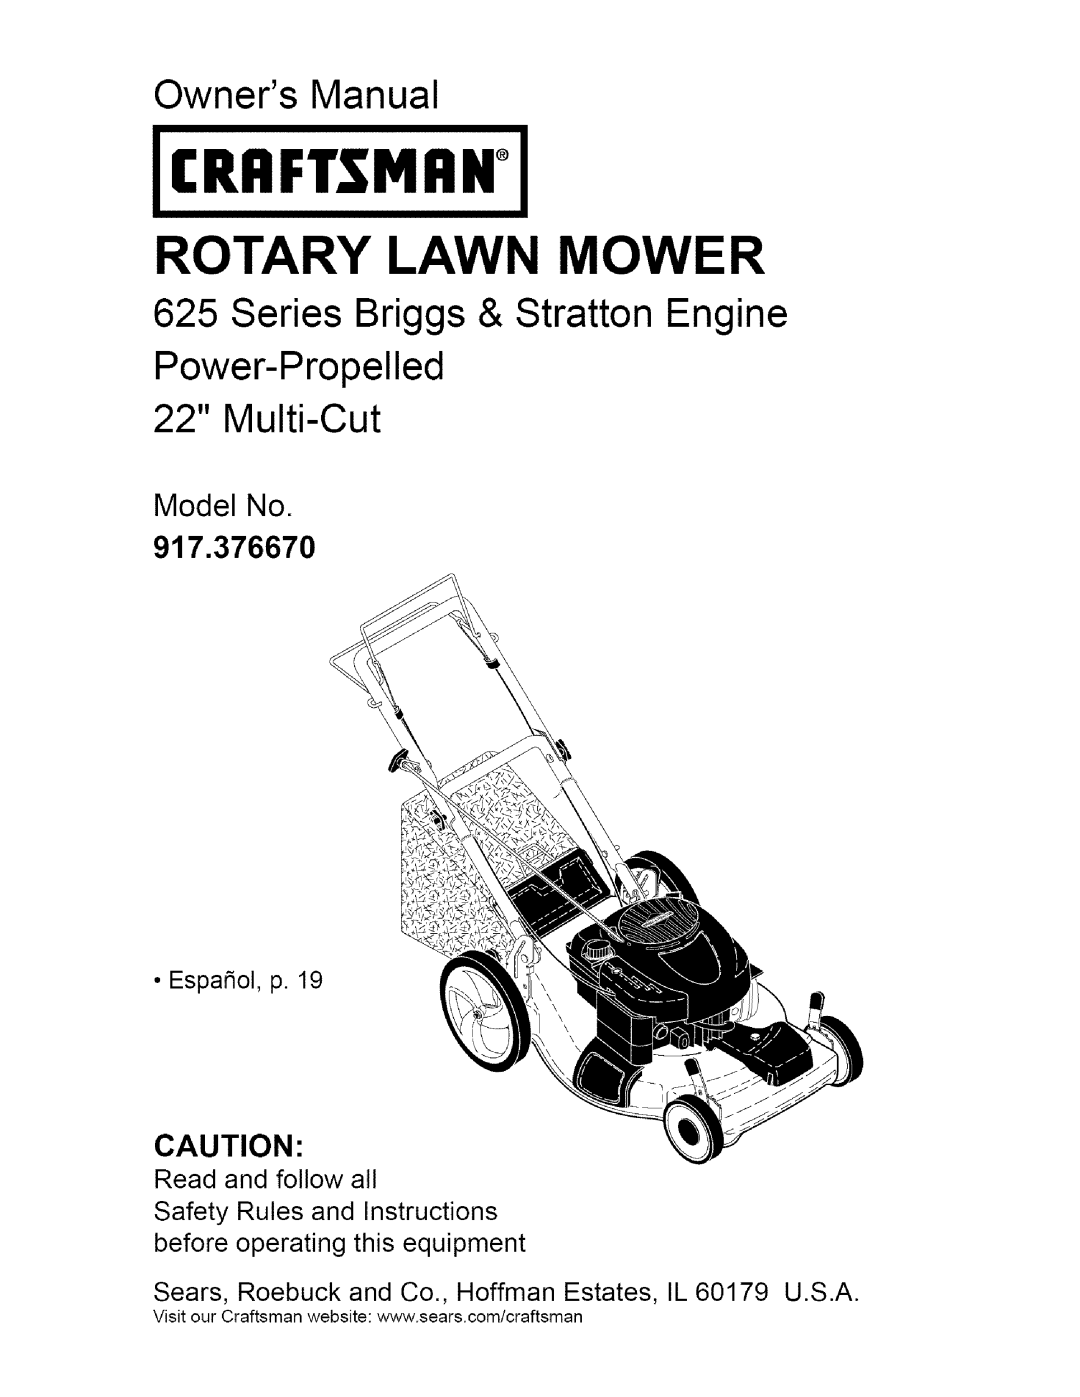 Craftsman owner manual Crrftsmrn, Rotary Lawn Mower, Series Briggs & Stratton Engine, Model No, 917.376670 